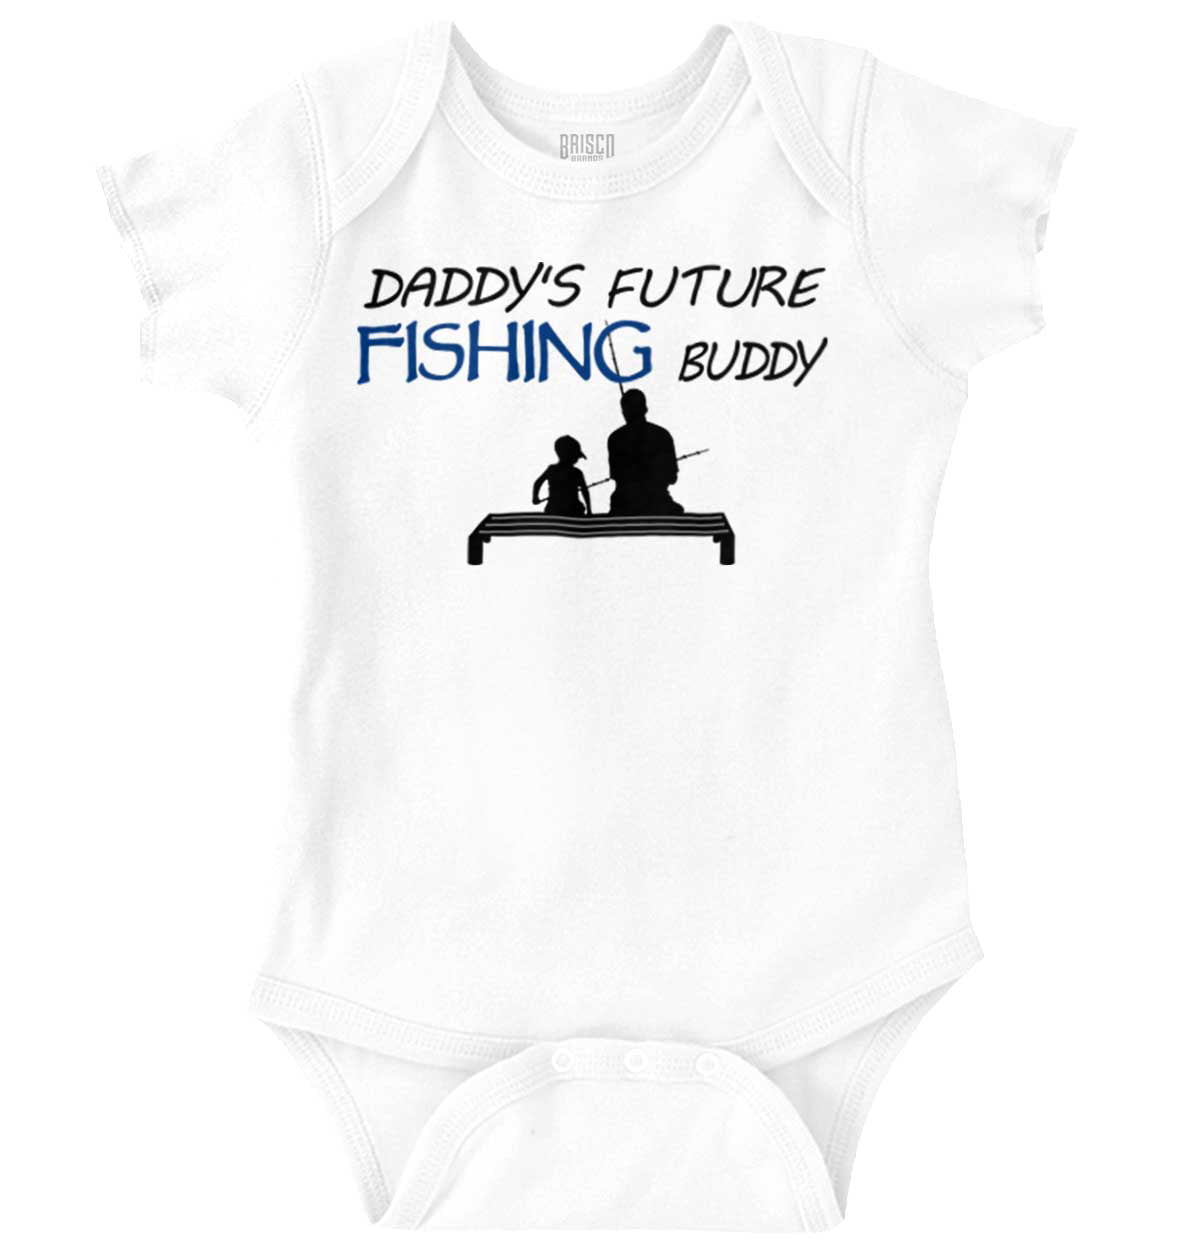 Cool Daddy's Future Fishing Buddy Bodysuit Jumper Boys Infant Baby Brisco  Brands 18M